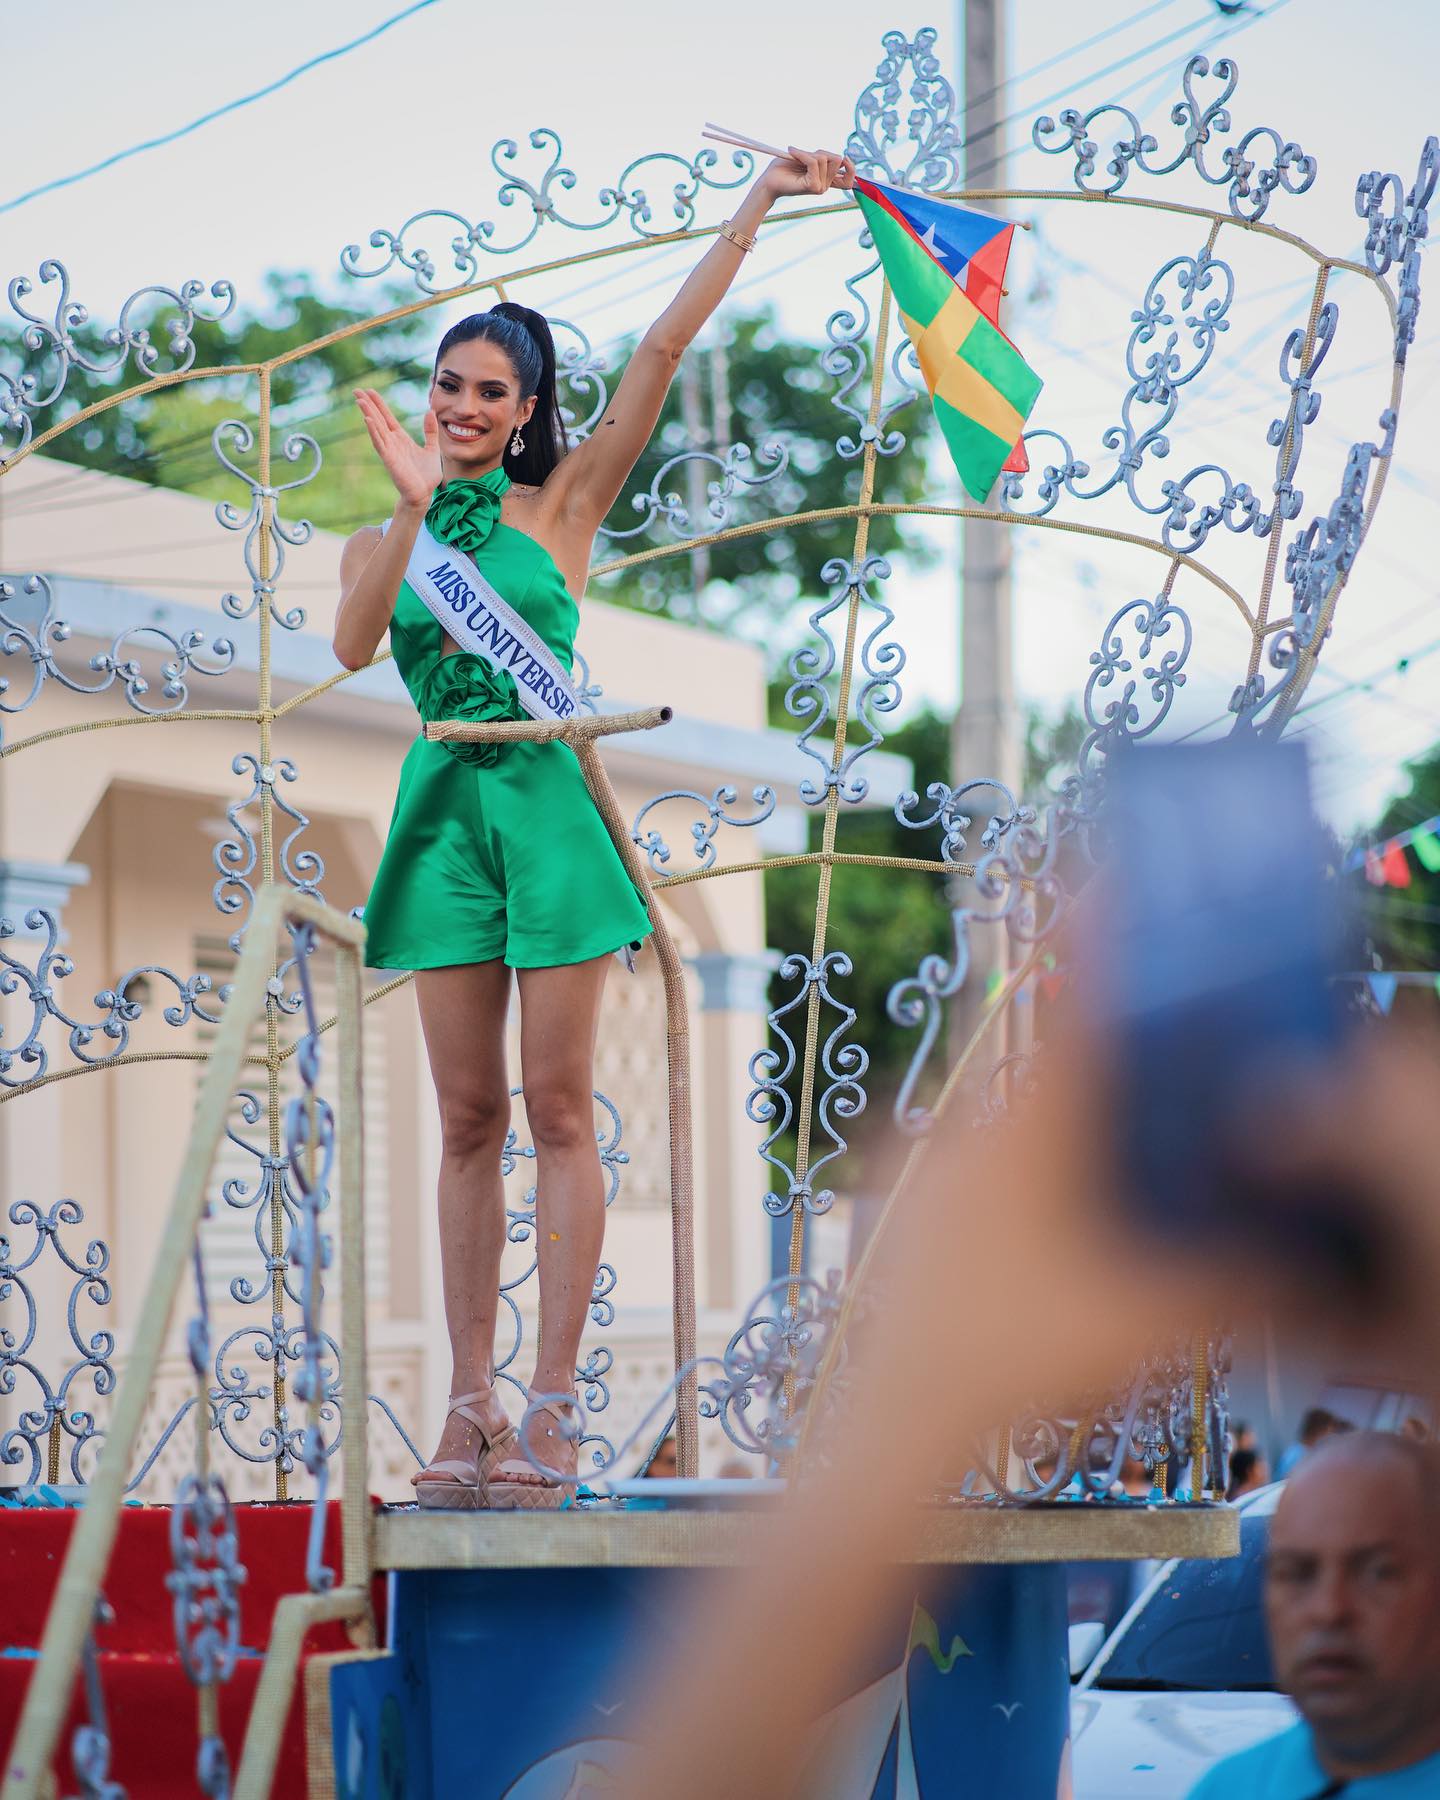 karla guilfu, top 5 de miss universe 2023/1st runner-up de miss supranational 2021. - Página 11 42873011